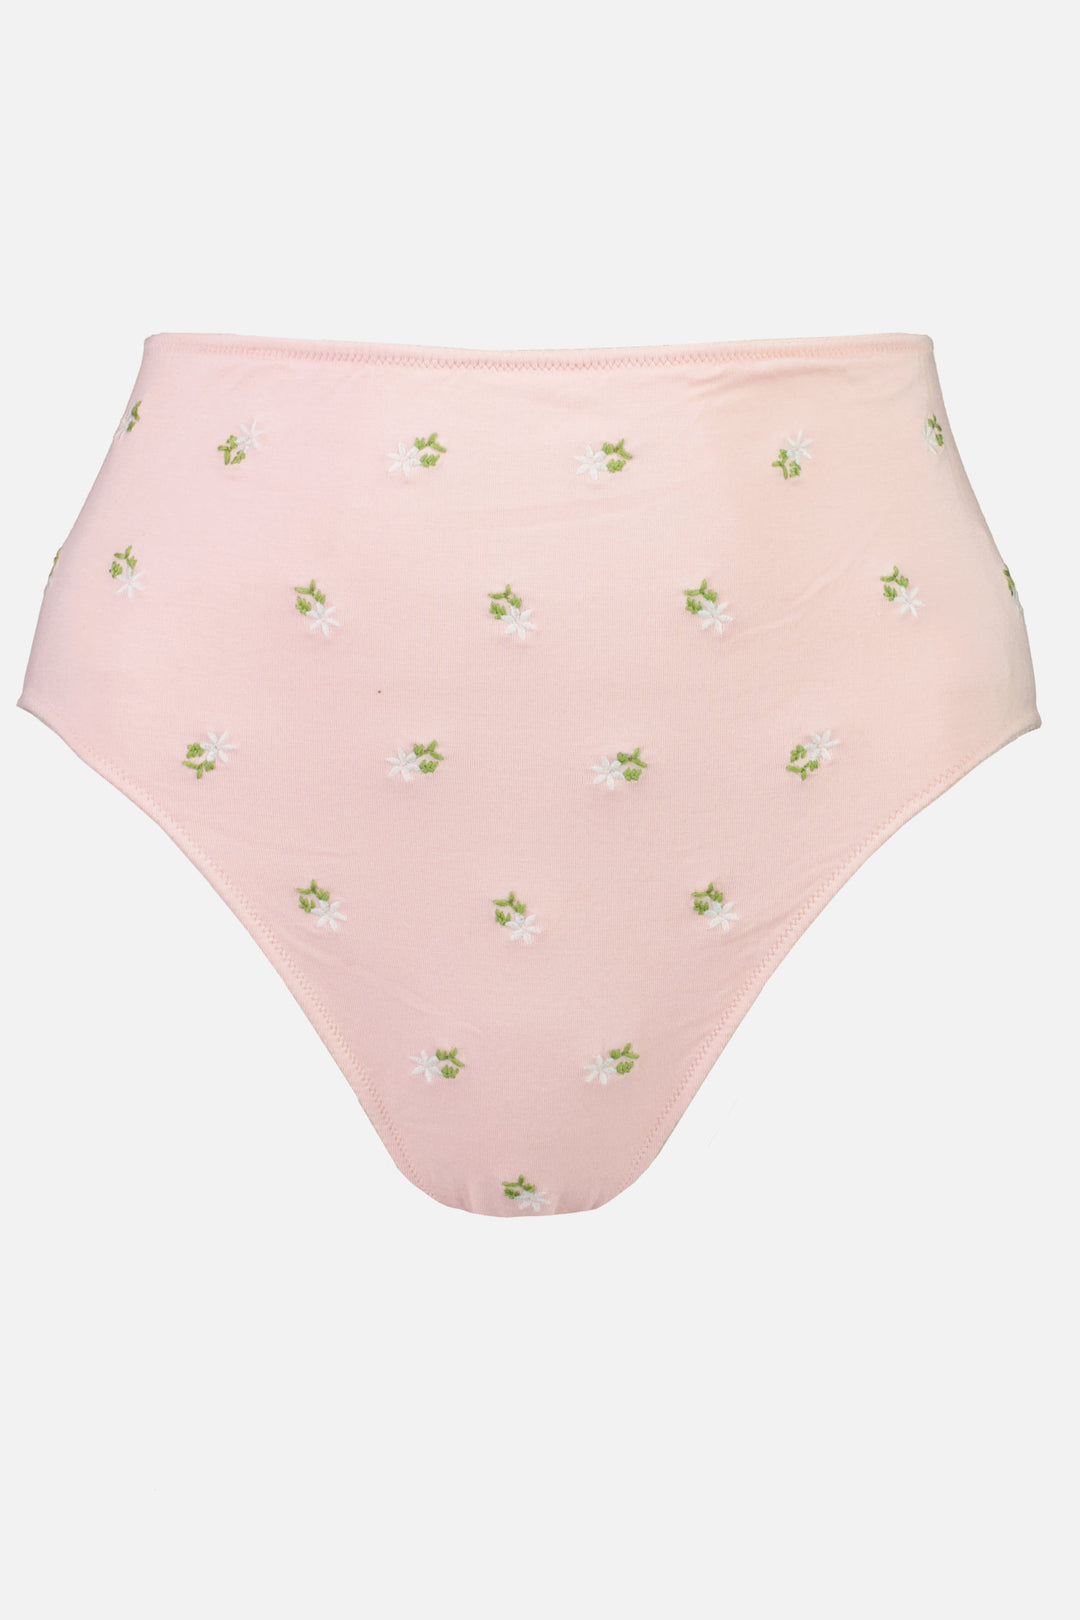 Whitney High Waist Bikini - Rosy Blossom